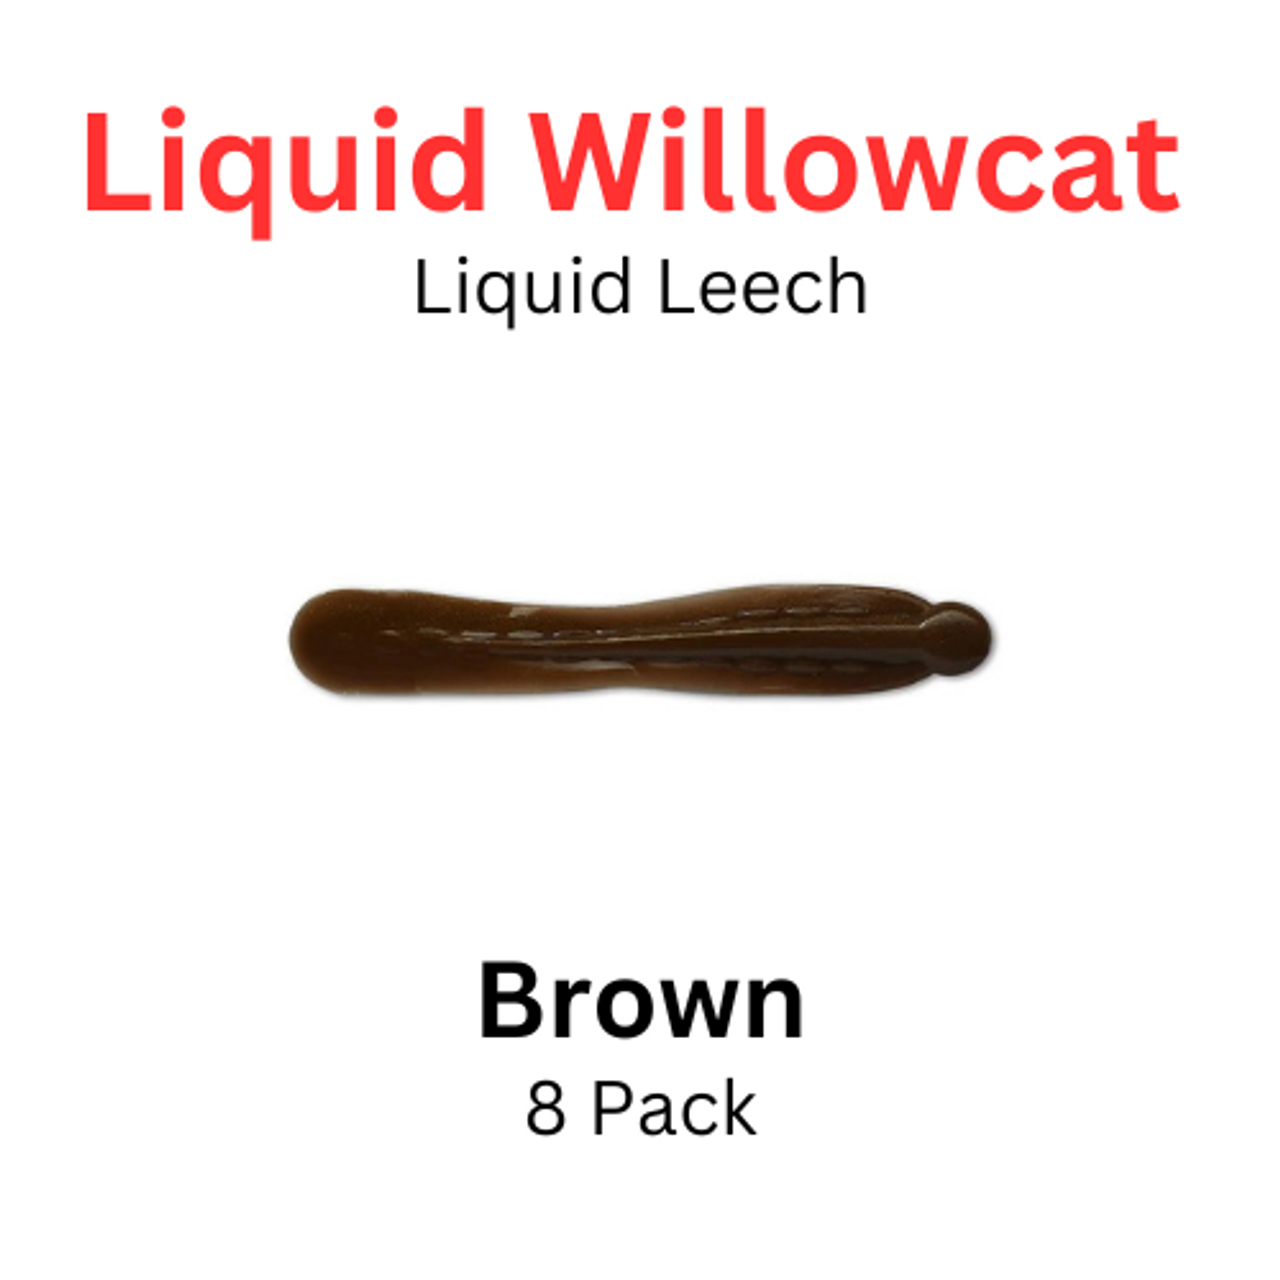 LIQUID WILLOWCAT Soft Plastic LIQUID LEECH BROWN 8 Pack